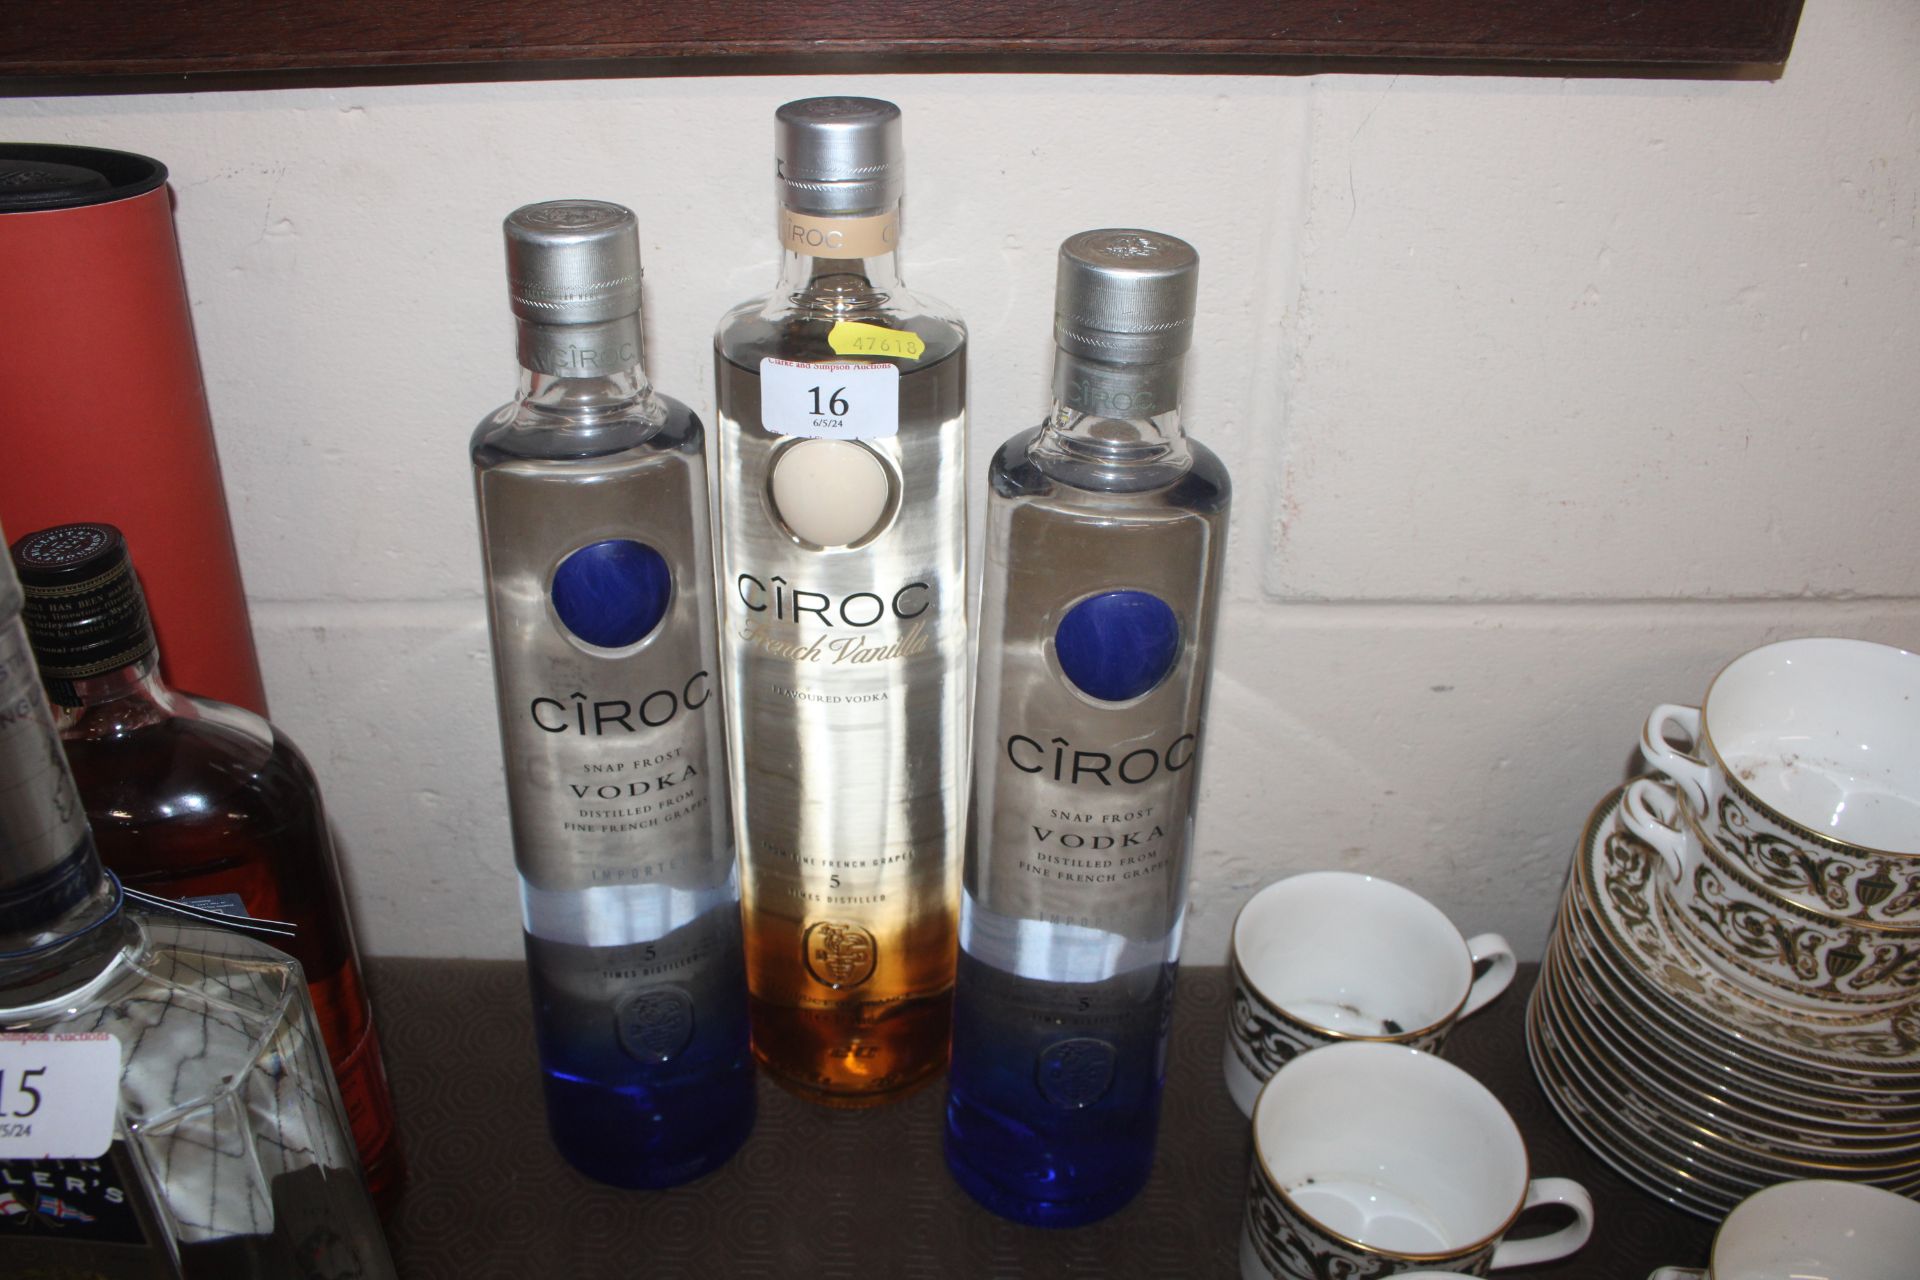 Three bottles of Ciroc Vodka